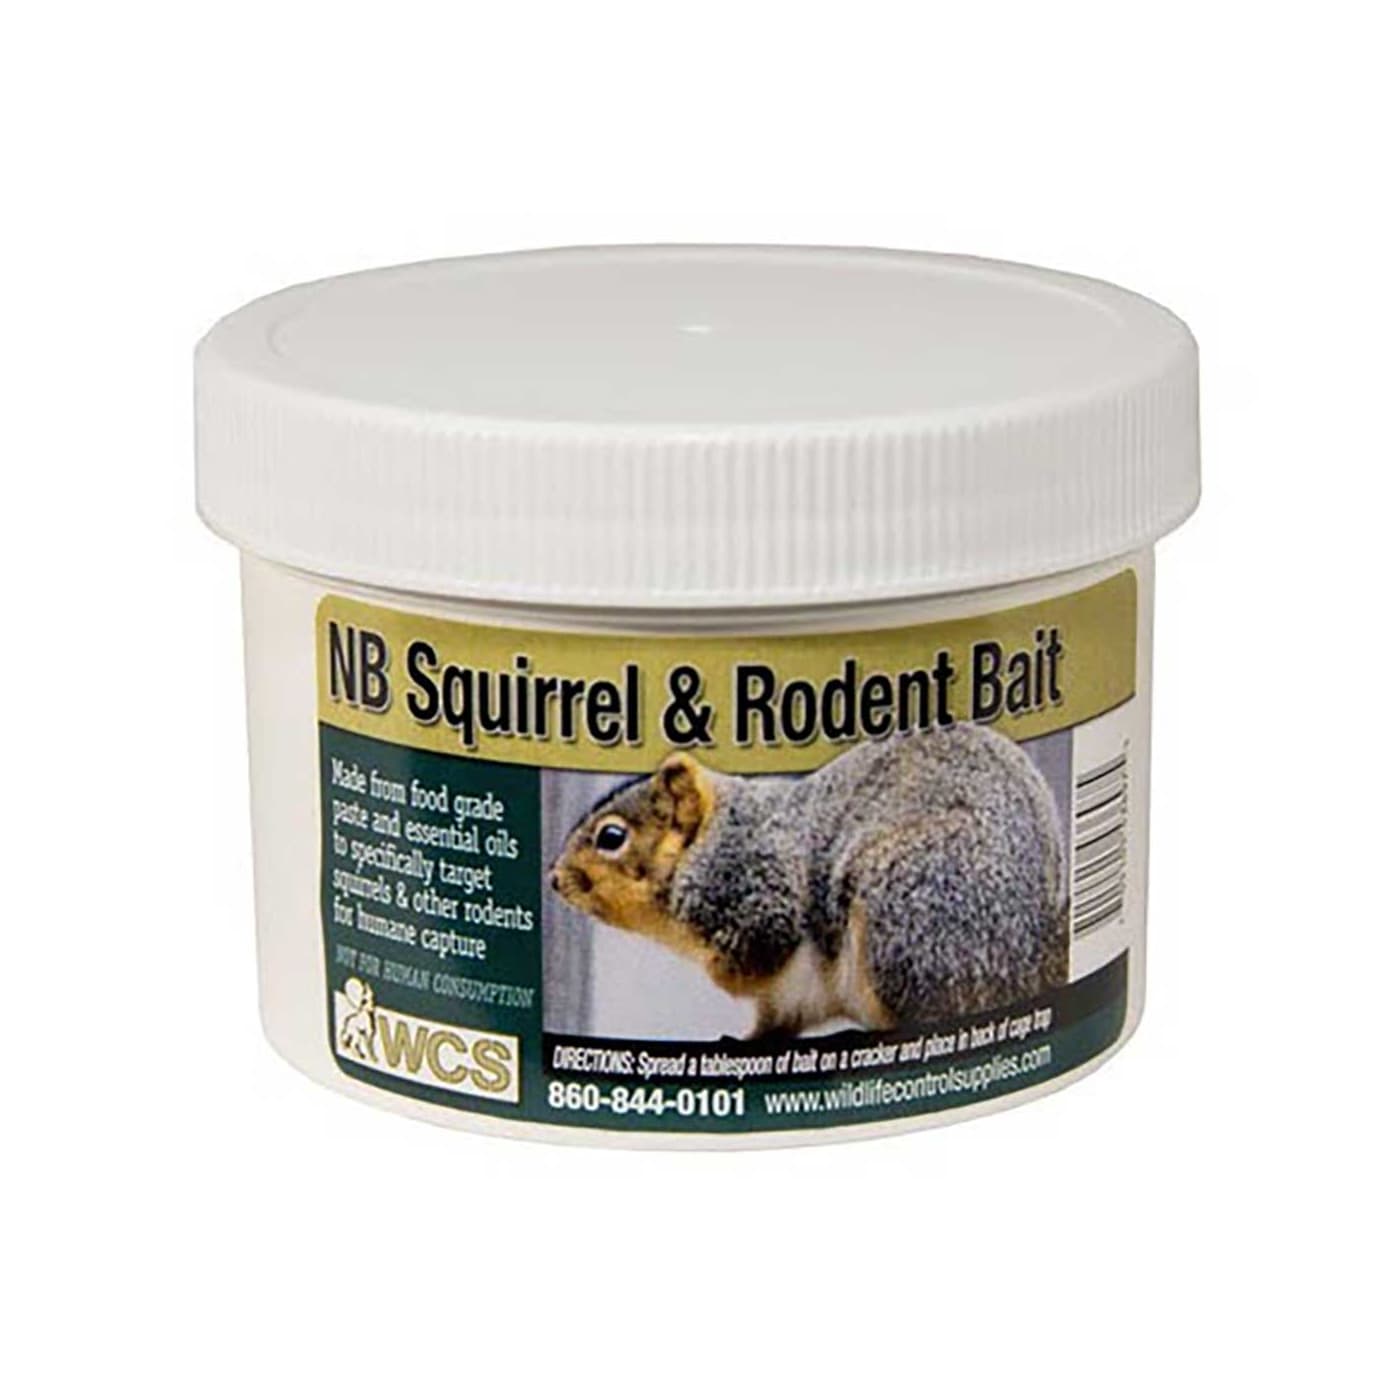 NB Squirrel & Rodent Paste Bait